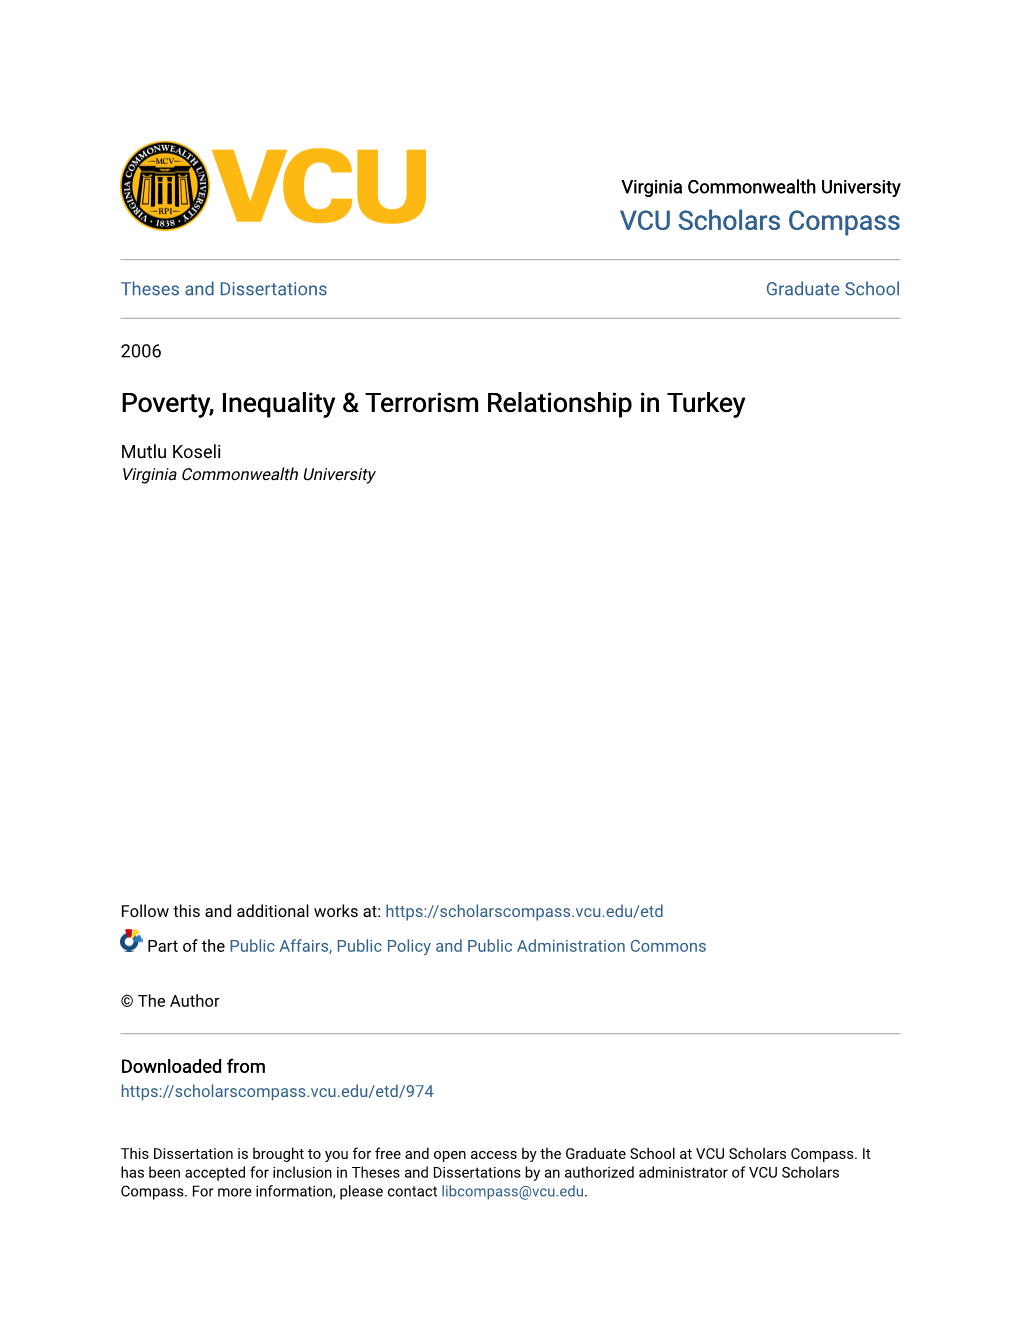 Poverty, Inequality & Terrorism Relationship in Turkey